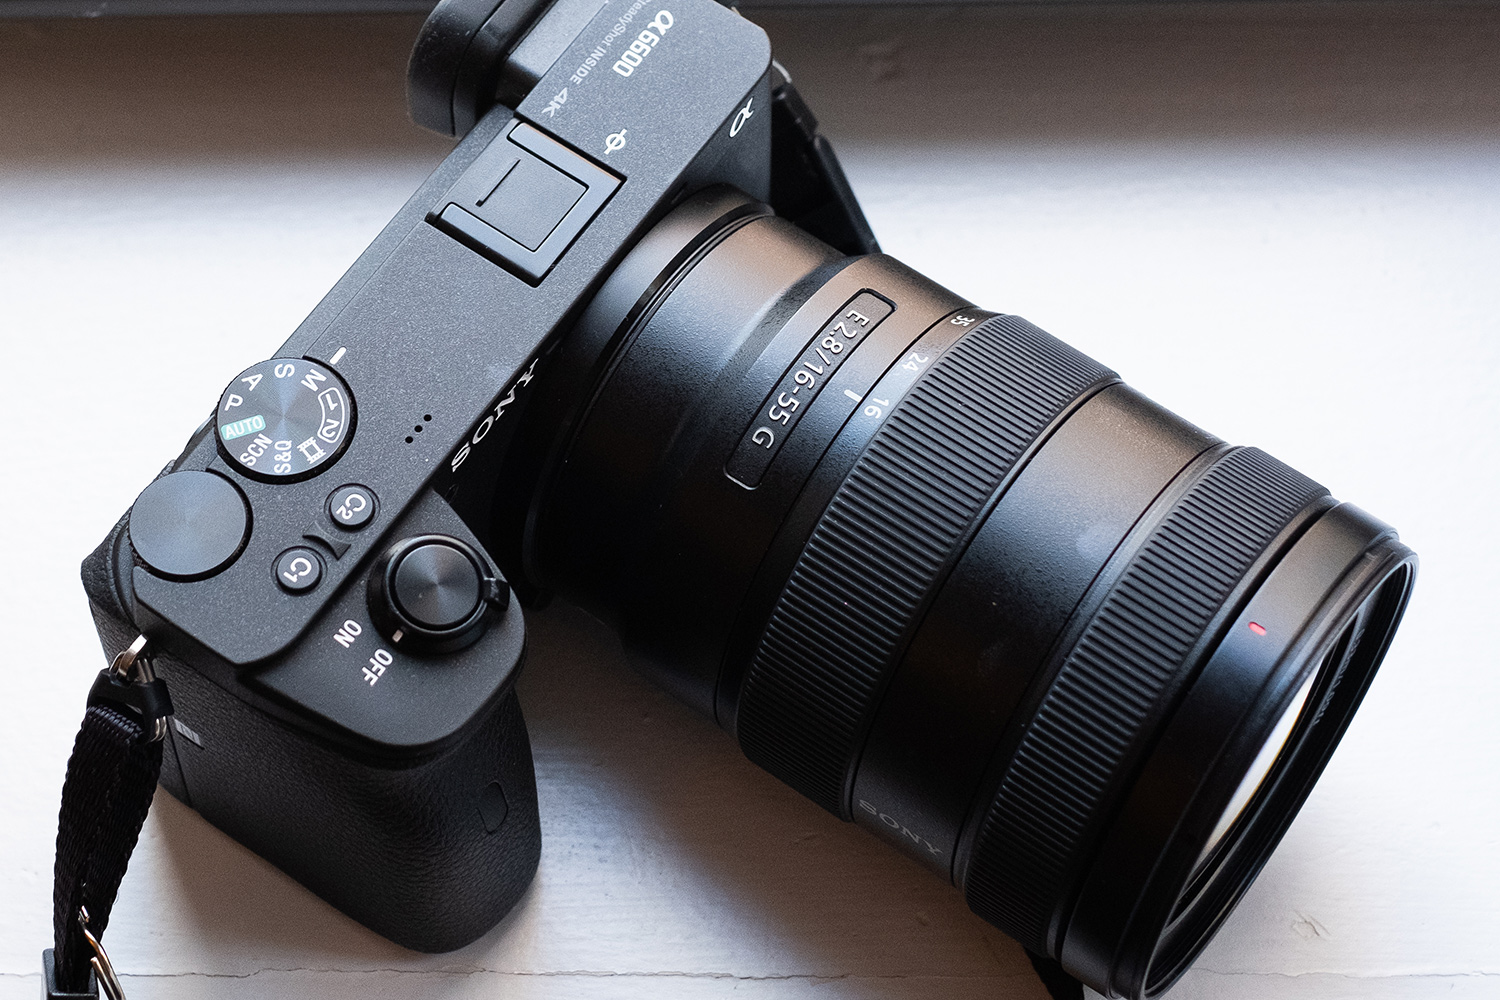 Sony's Mirrorless Cameras